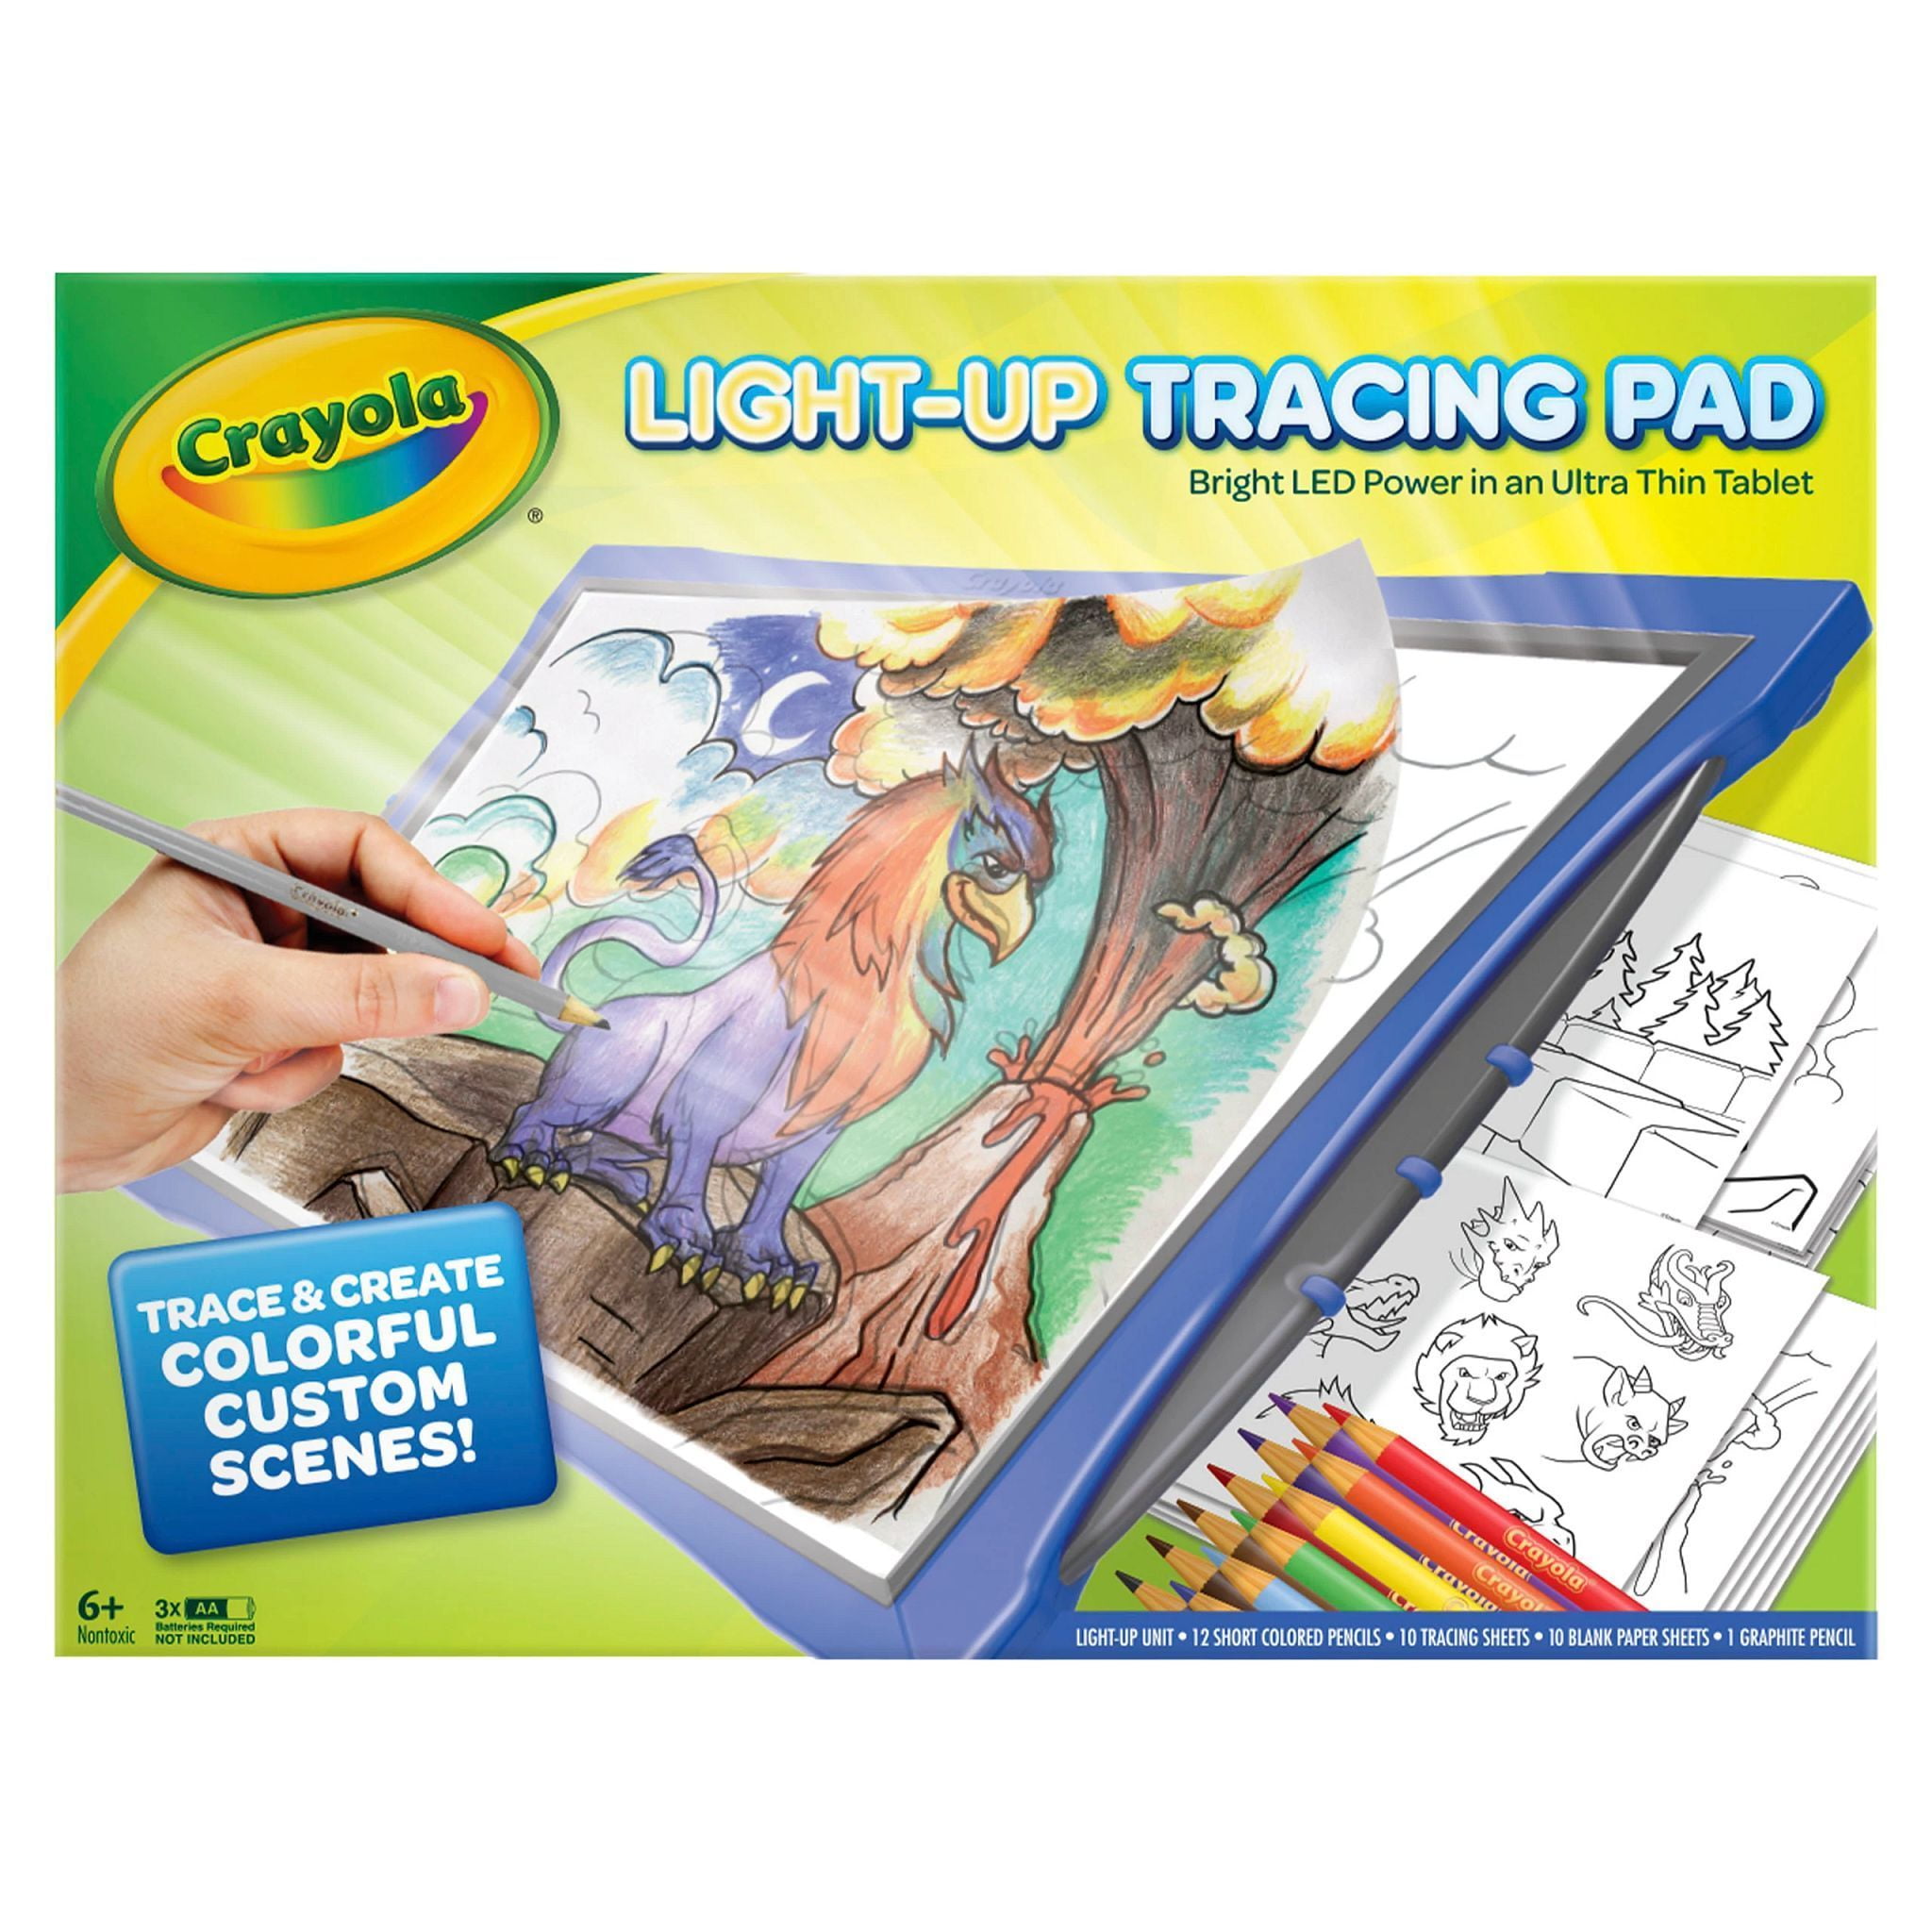 Crayola Light Up Tracing Pad for £7.50 at Argos